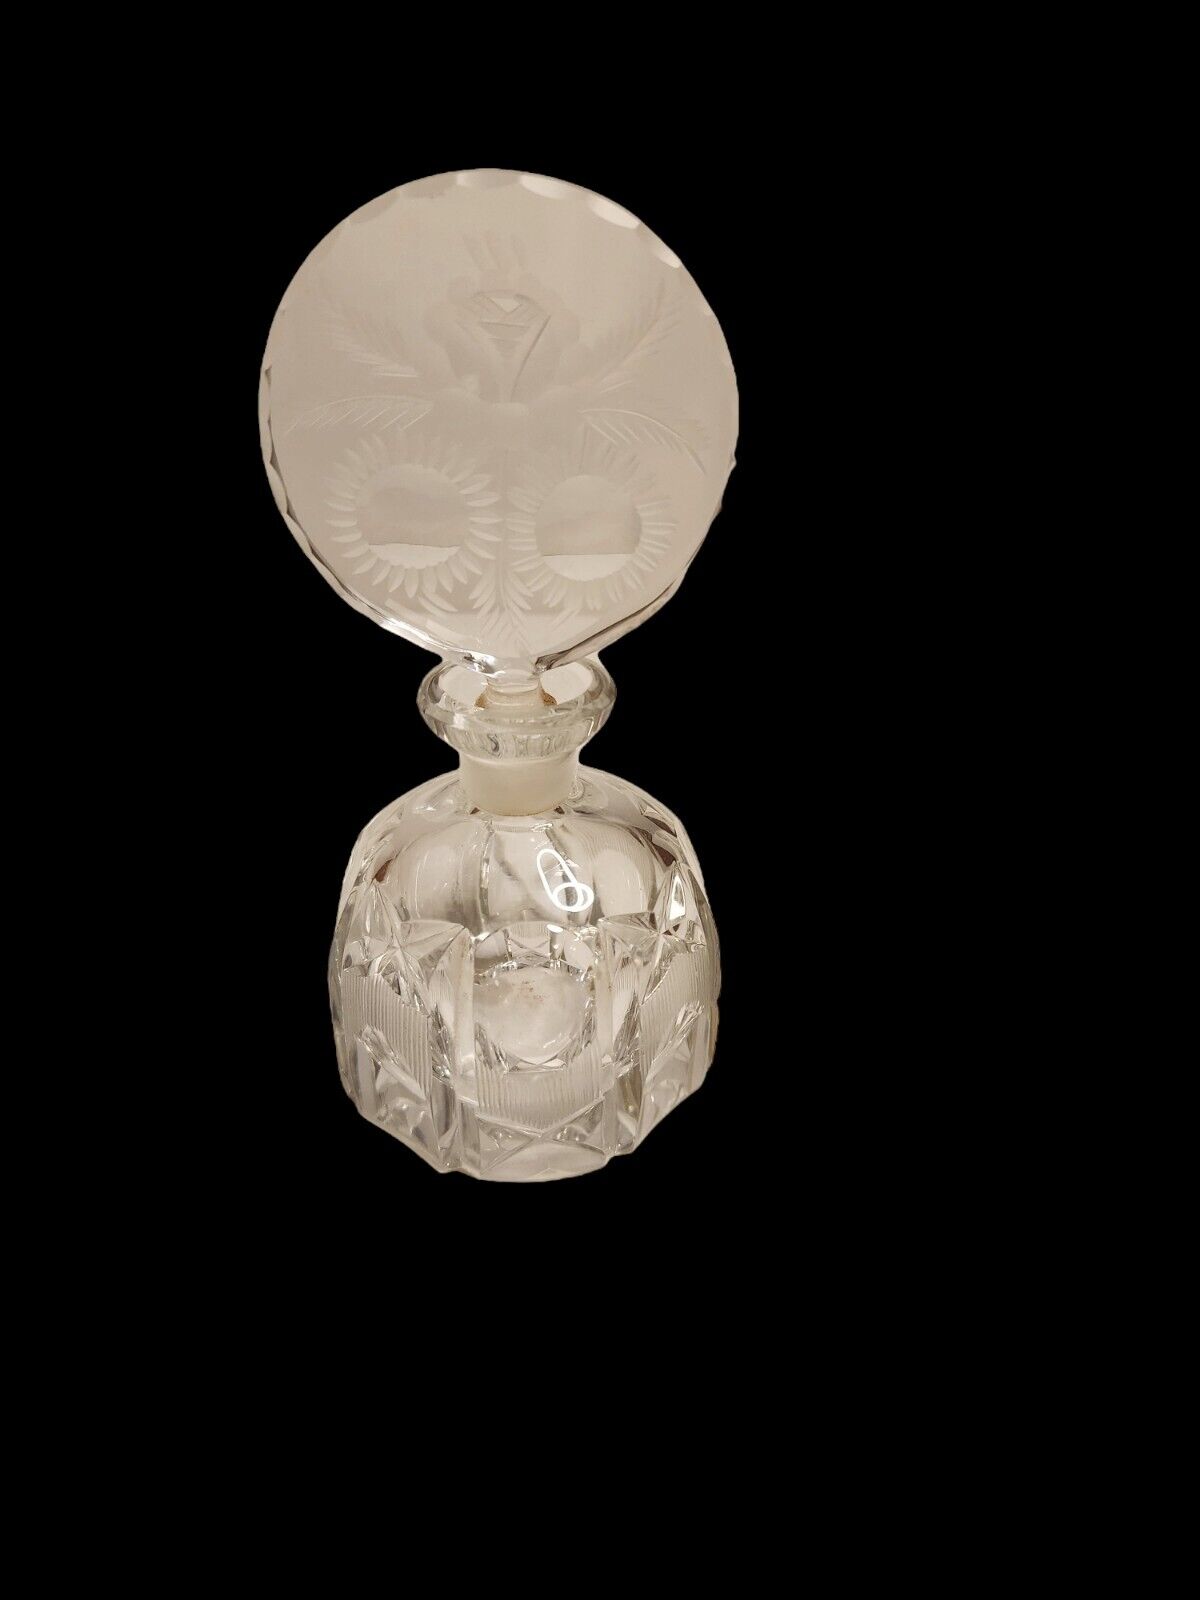 Vintage Cut Crystal Glass Perfume Bottle Etched Engraved Stopper